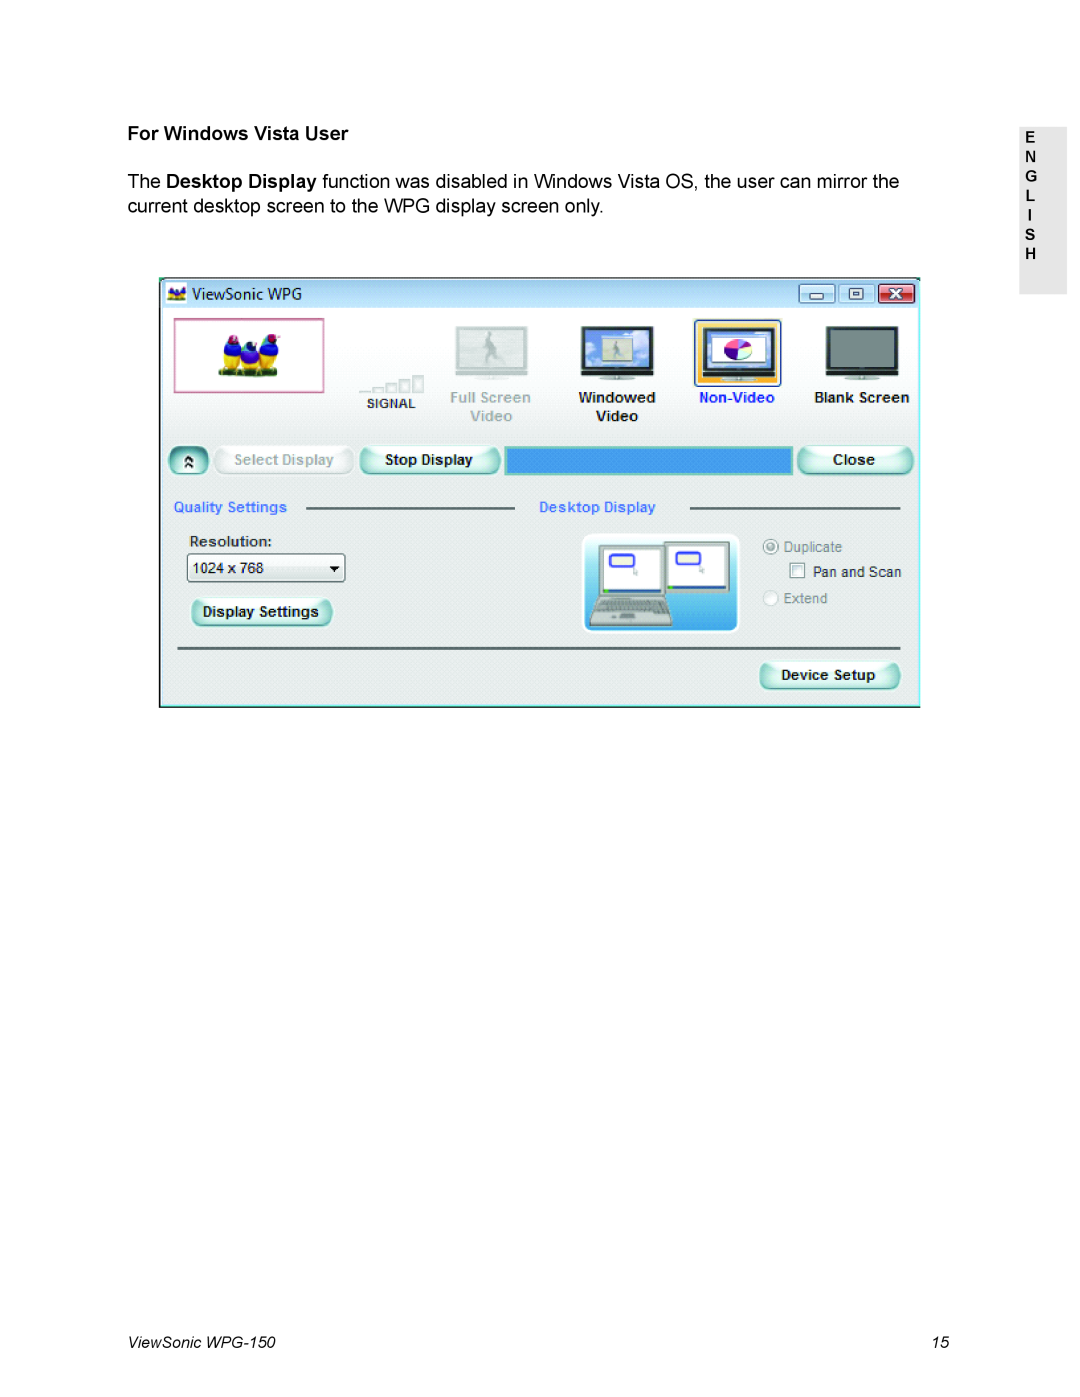 ViewSonic manual For Windows Vista User, E N G L I S H, ViewSonic WPG-150 